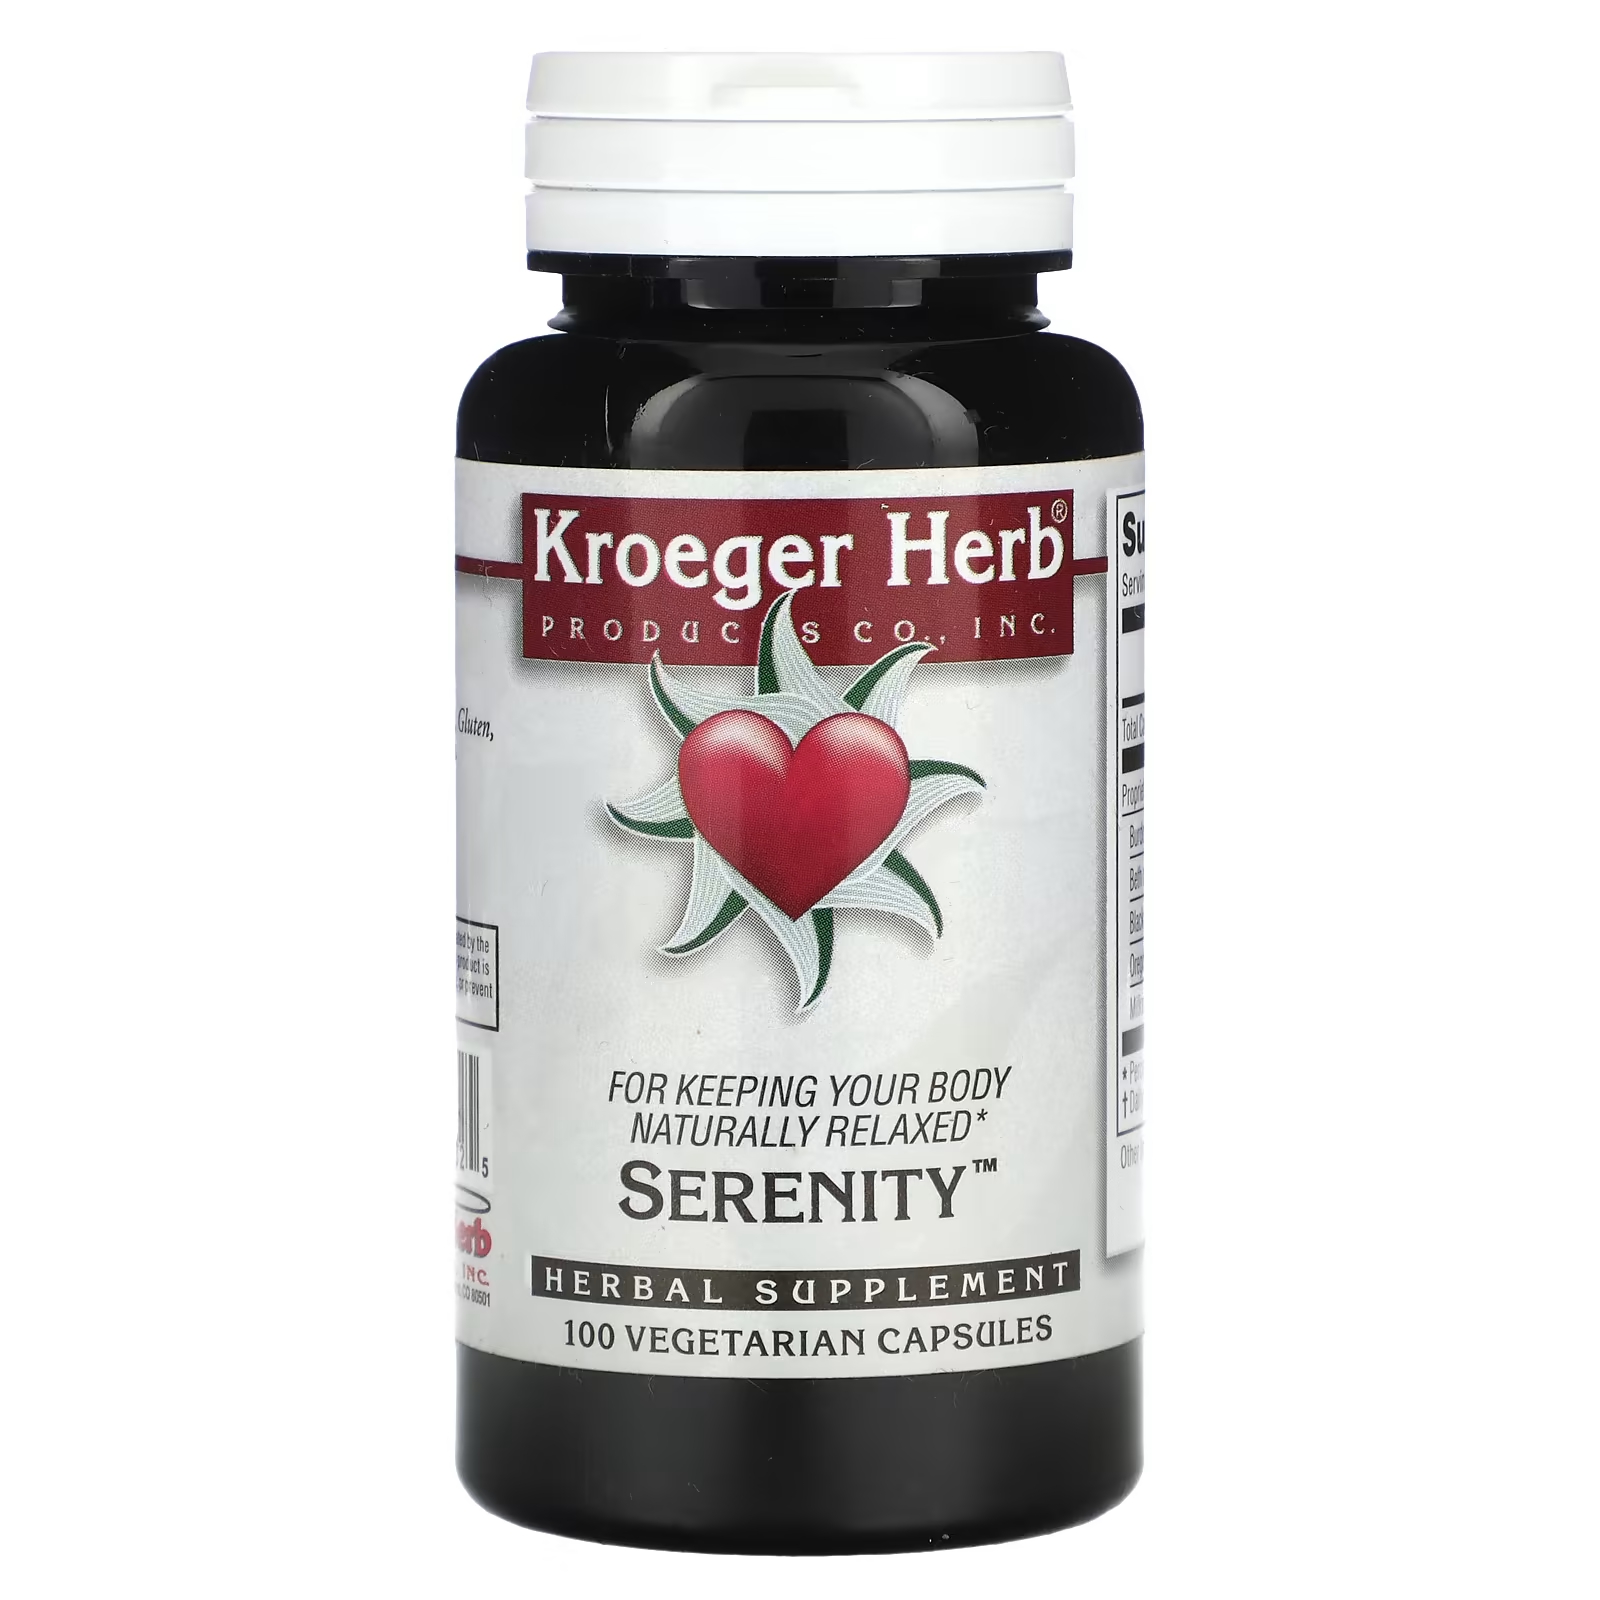 Растительная добавка Kroeger Herb Co Serenity, 100 капсул растительная добавка kroeger herb co балансировщик полярности 100 капсул